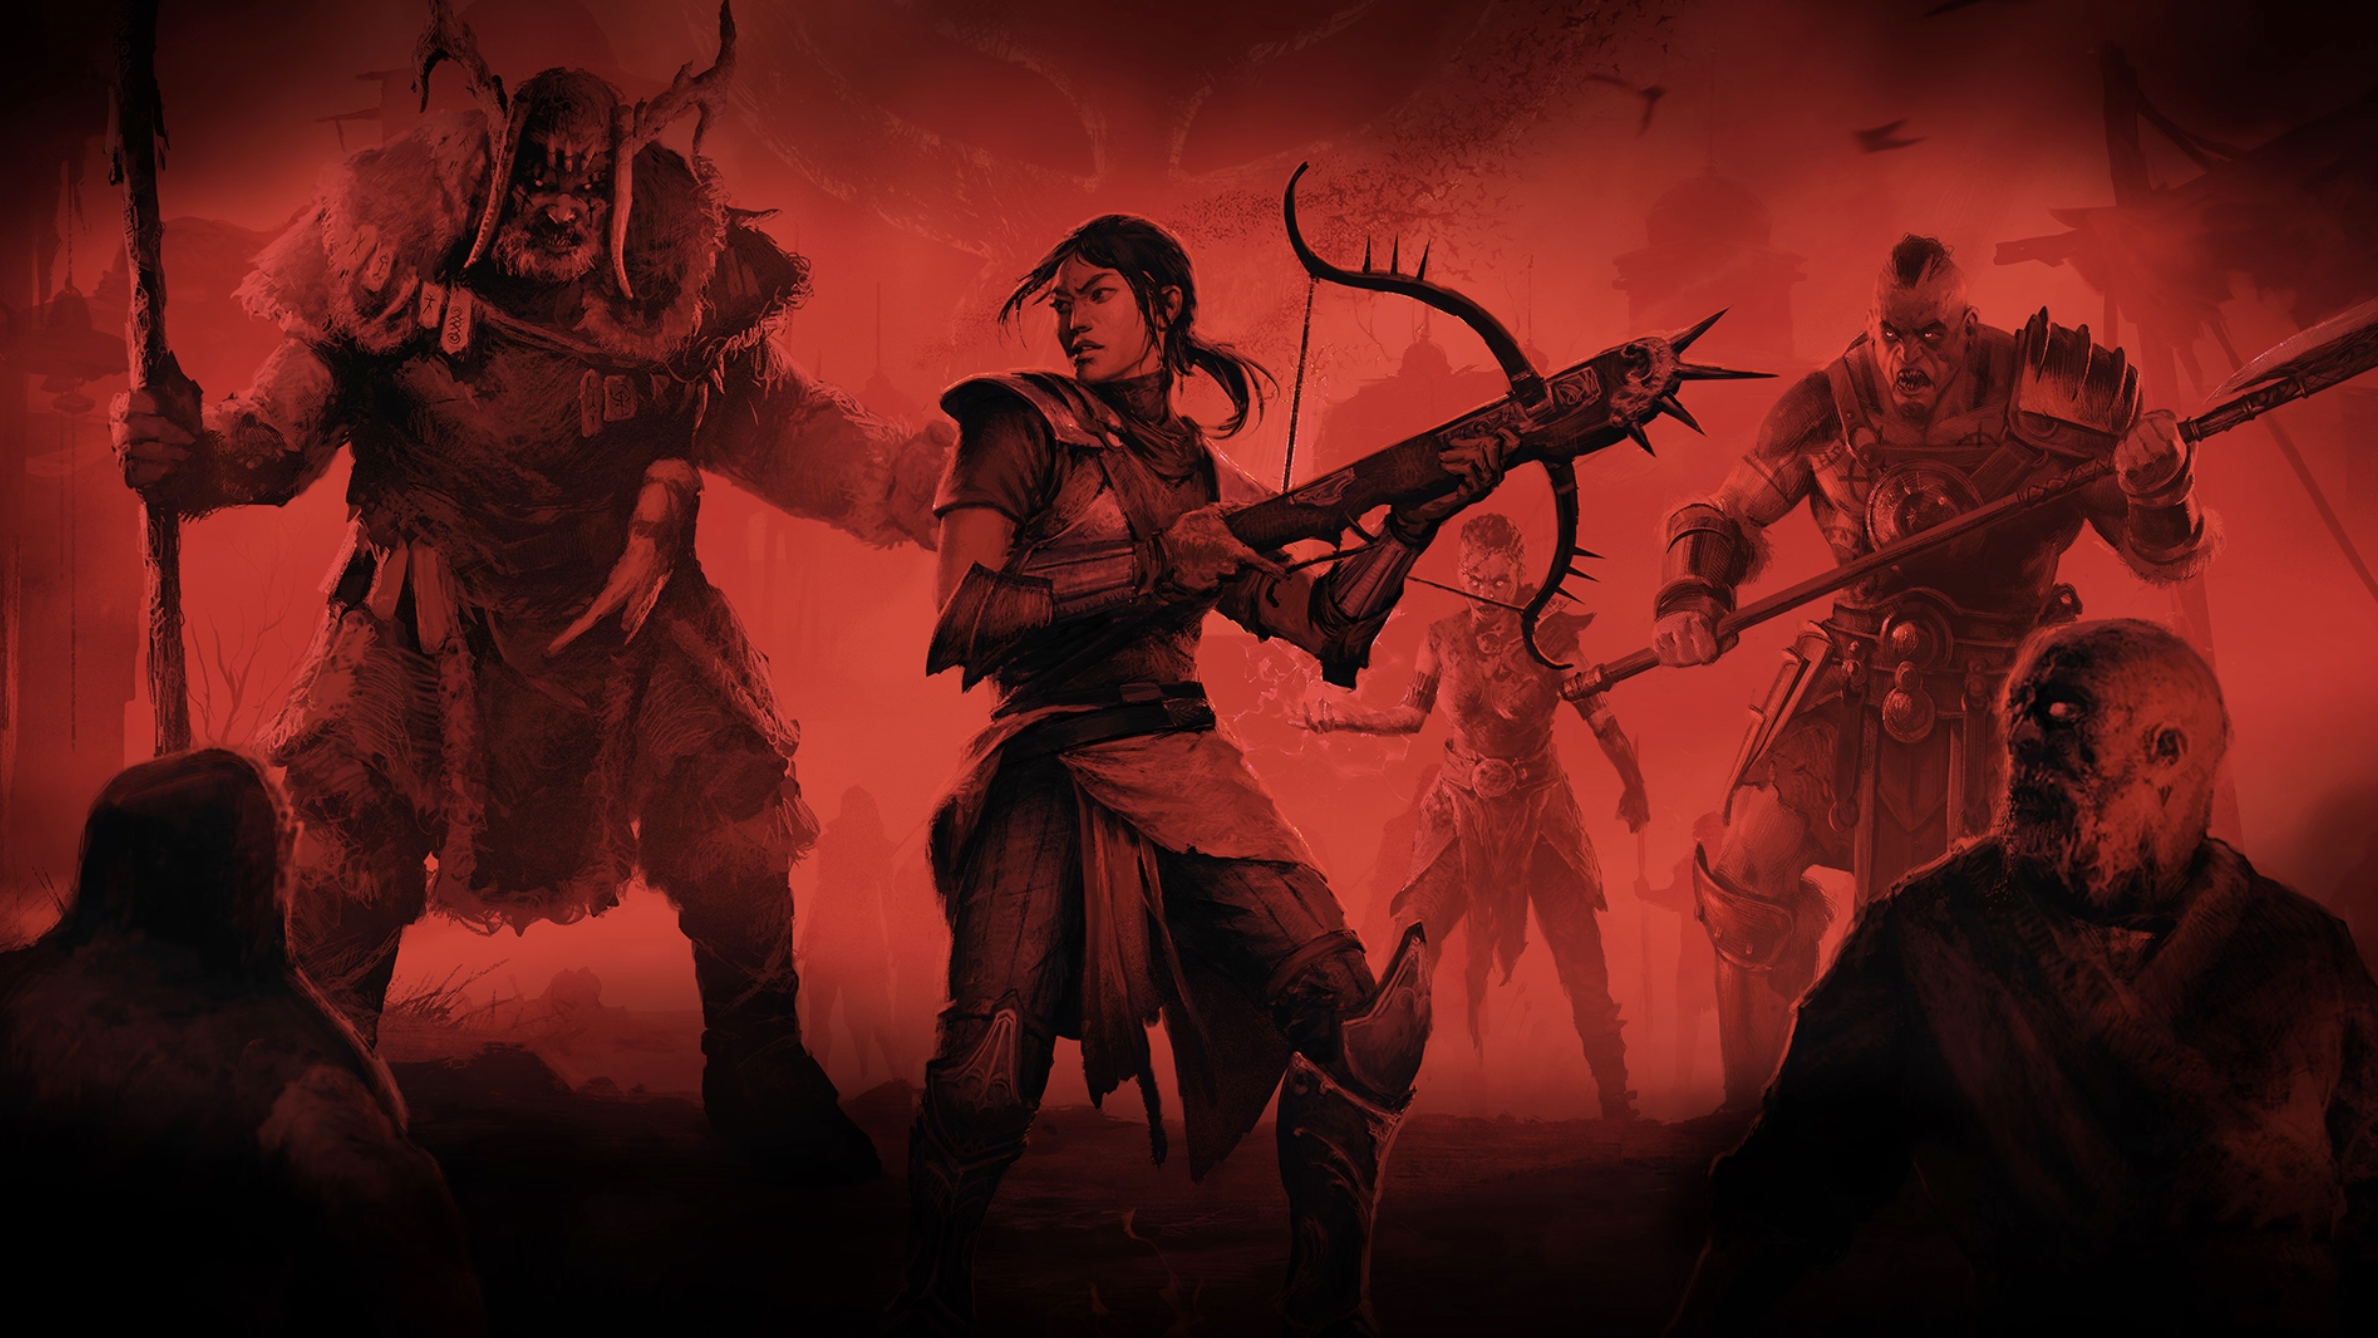 A rogue holds a crossbow in key art for Diablo 4 season 2.